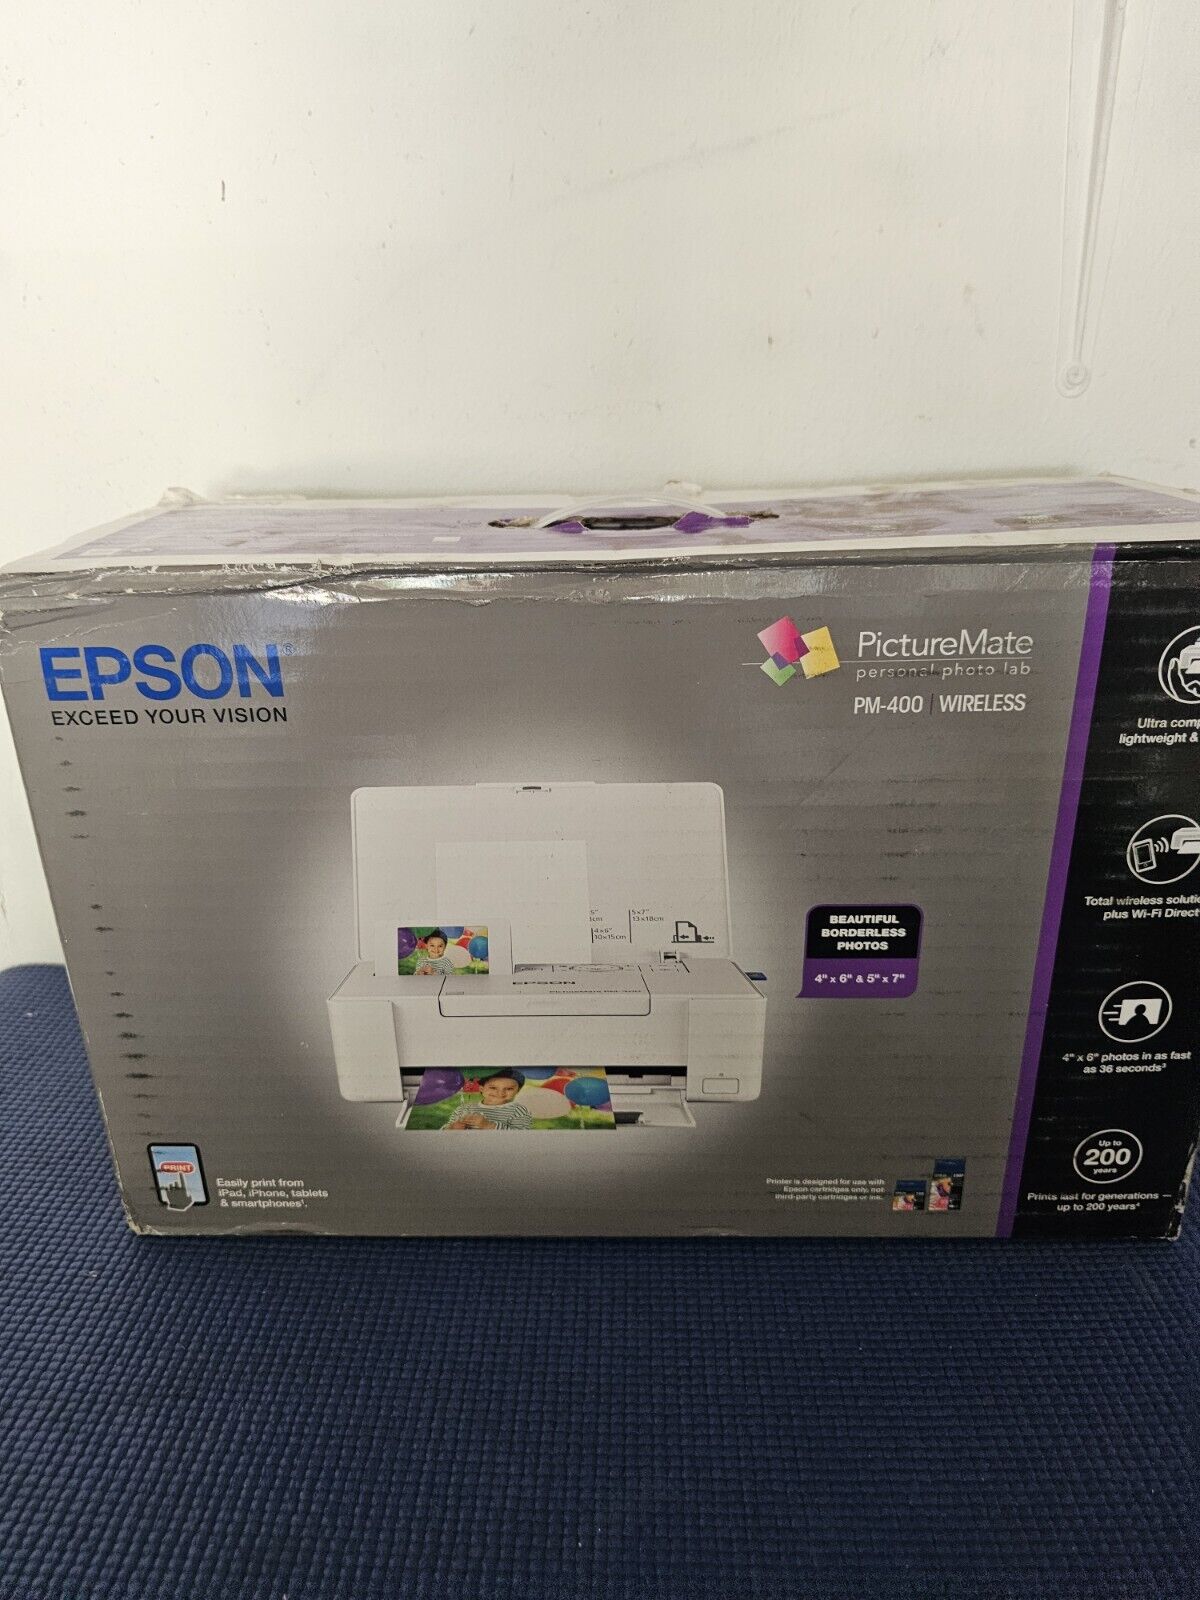 Epson PictureMate PM-400 Photo Printer Excellent